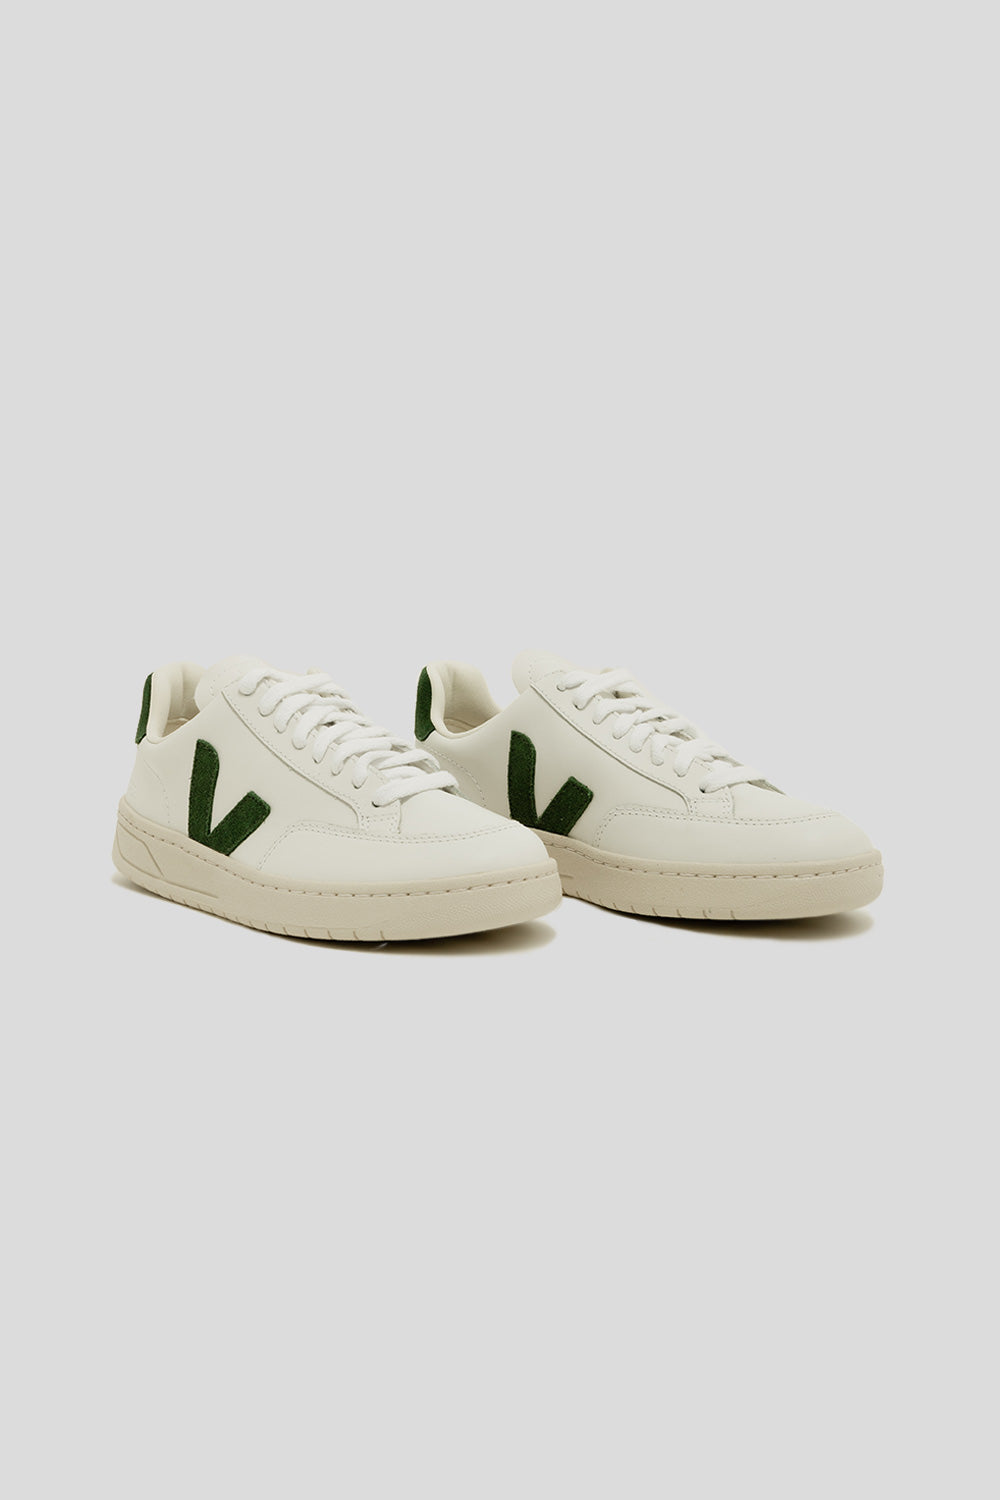 veja-v-12-extra-white-leather-cypress-green-side